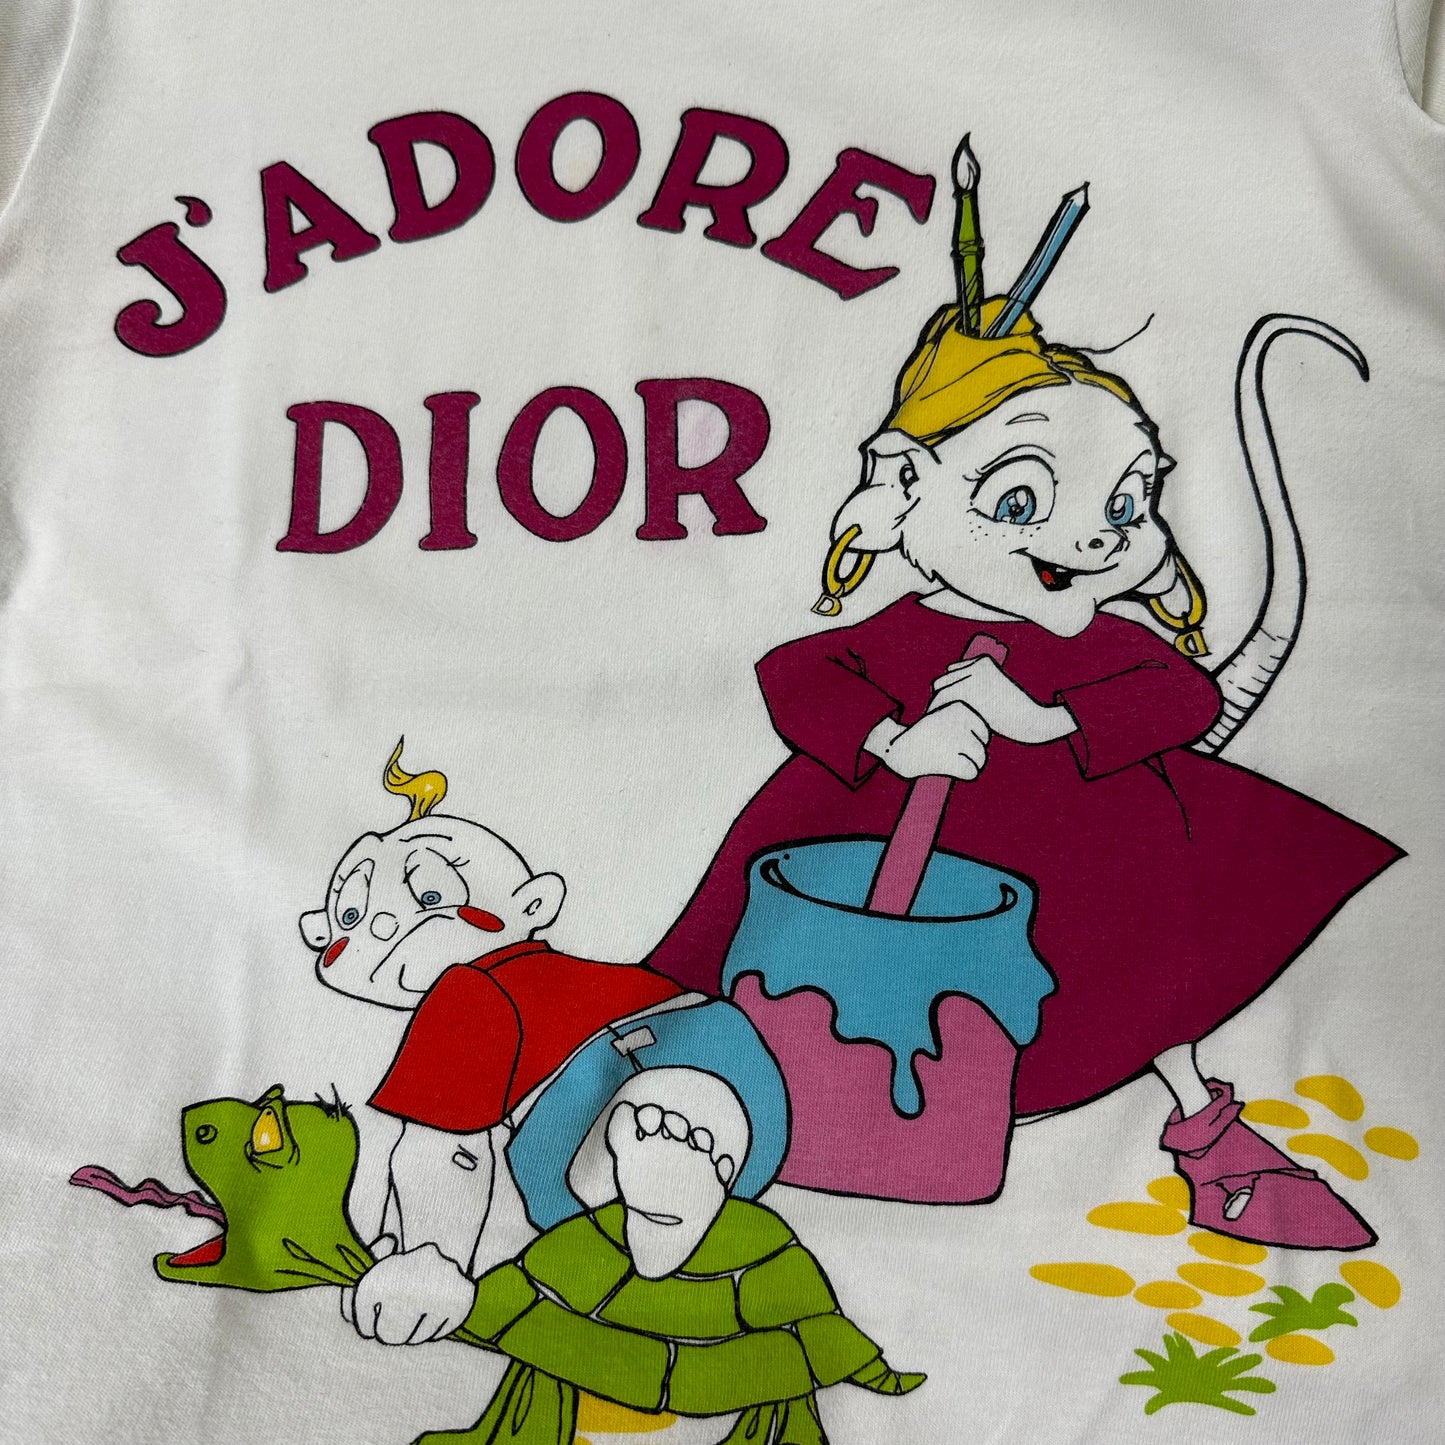 CHRISTIAN DIOR Spring Summer 2002 Cartoon "J'ADORE DIOR" T-Shirt